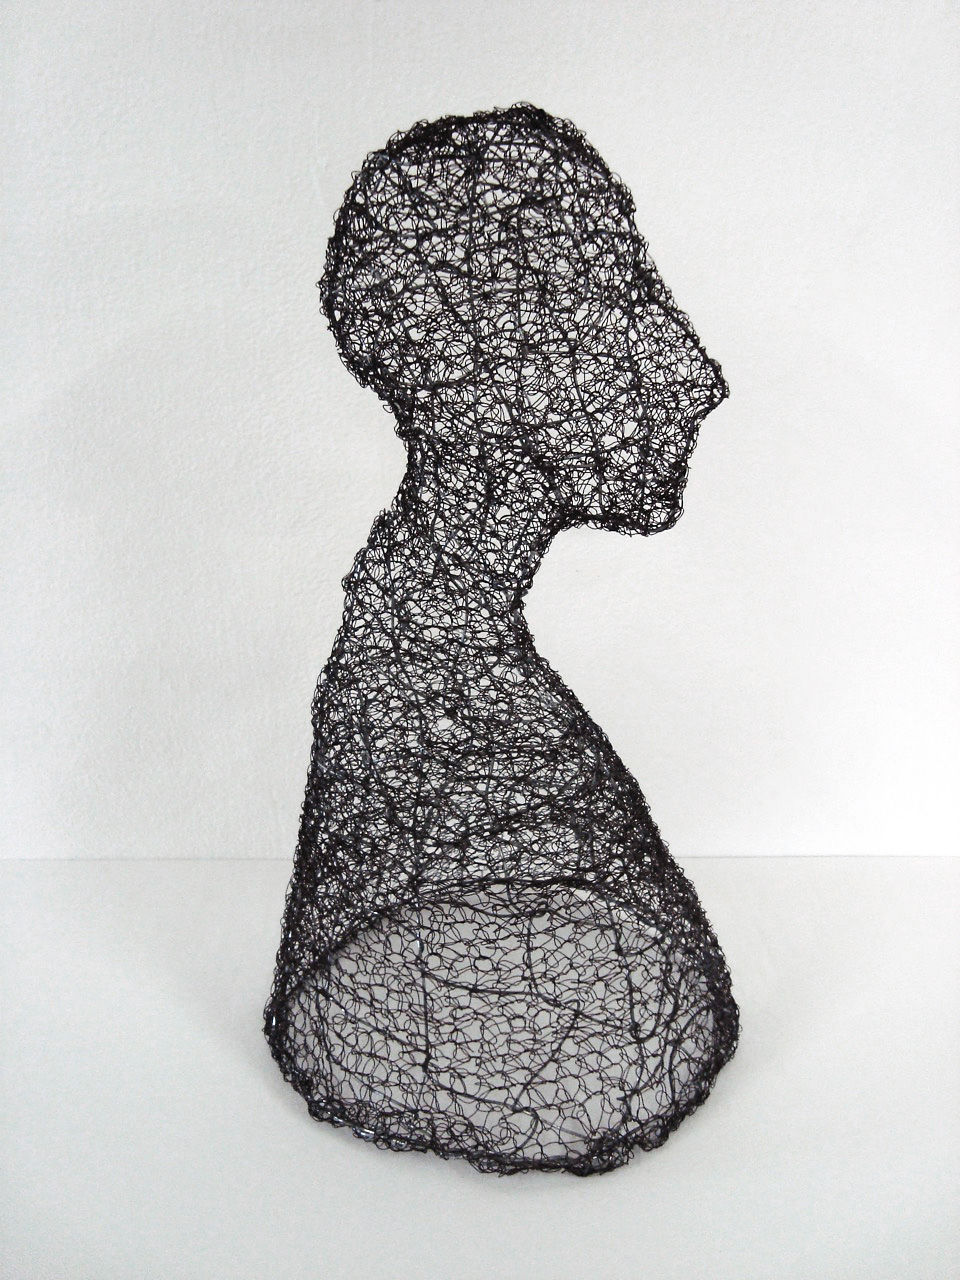 Kopf mit verzinktem Draht und gehäkeltem Blumenbinderdraht, Höhe: ca. 40 cm / 2014